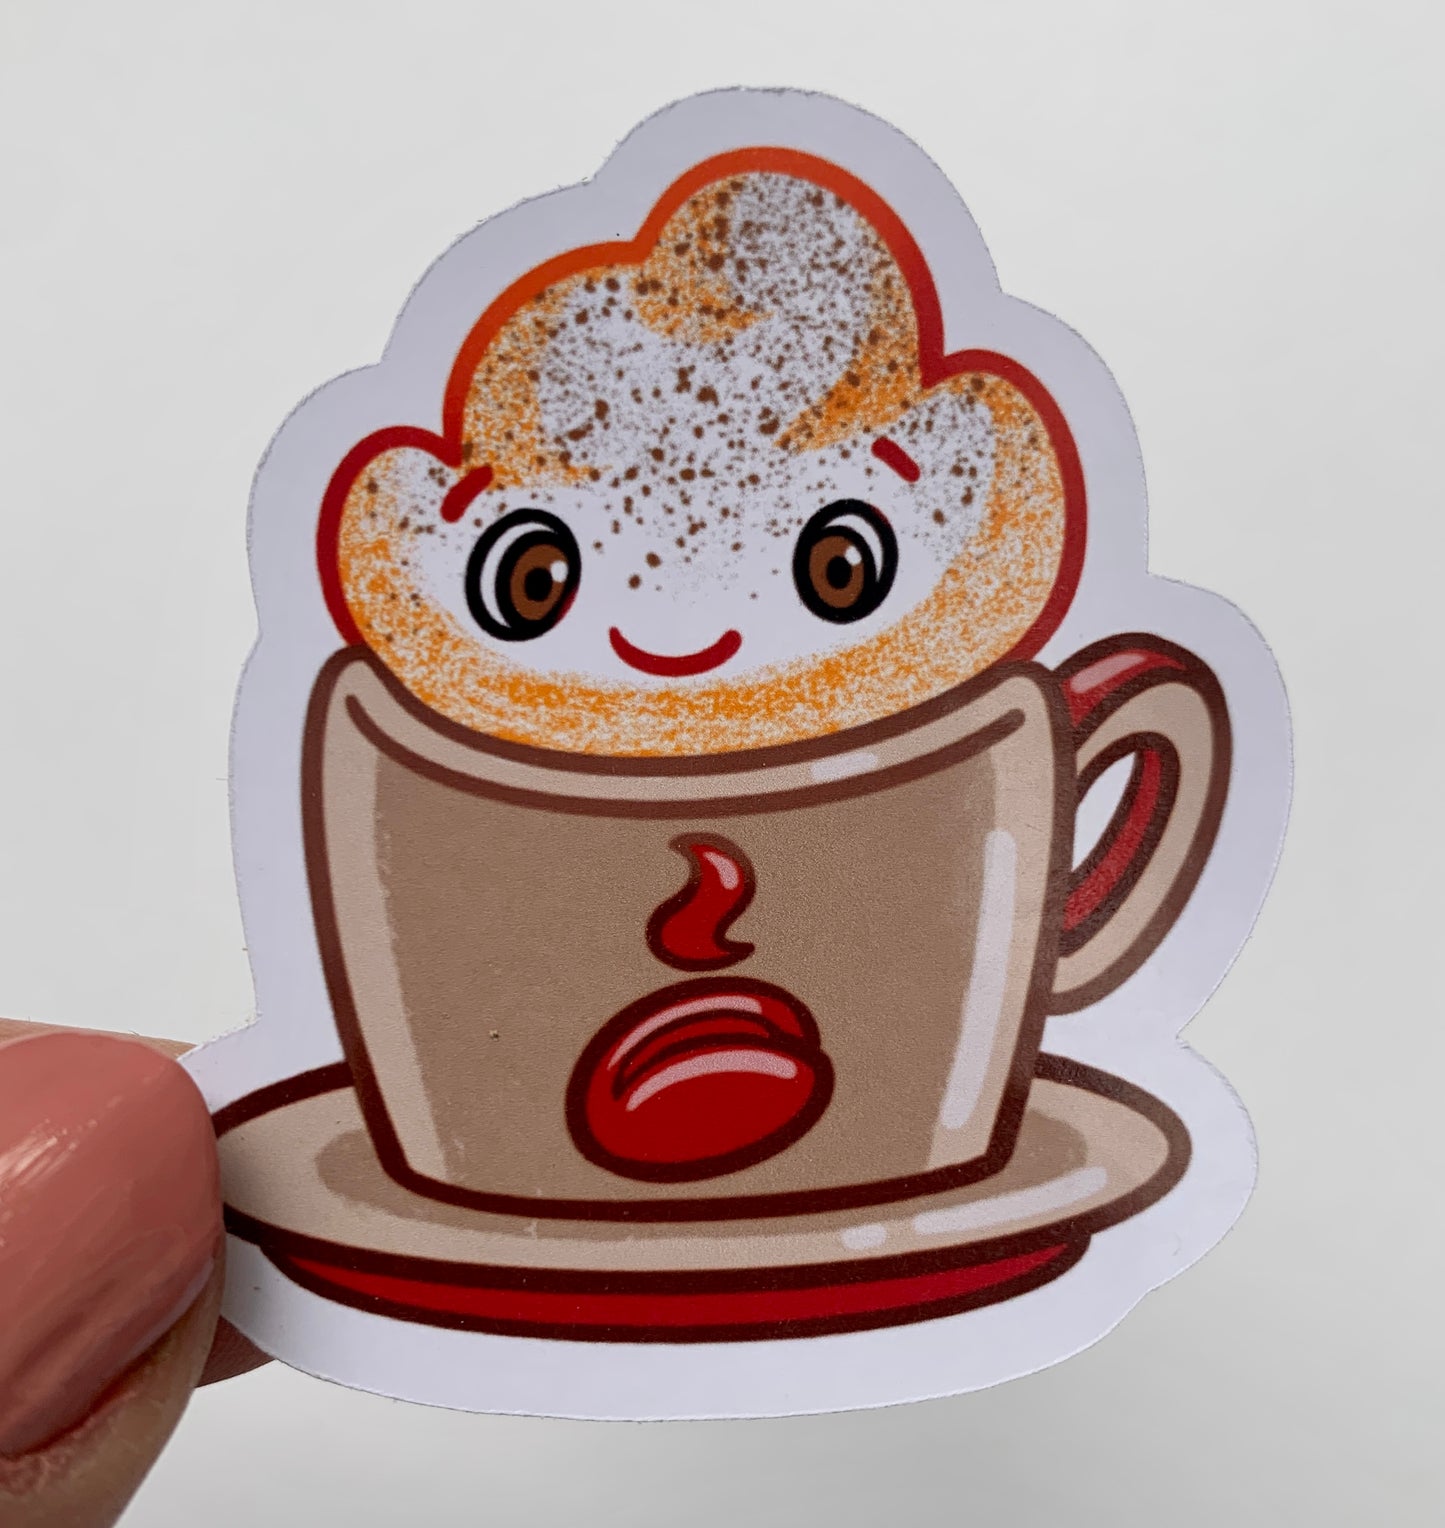 Die-Cut-Sticker "Happy Breakfast Cappuccino"